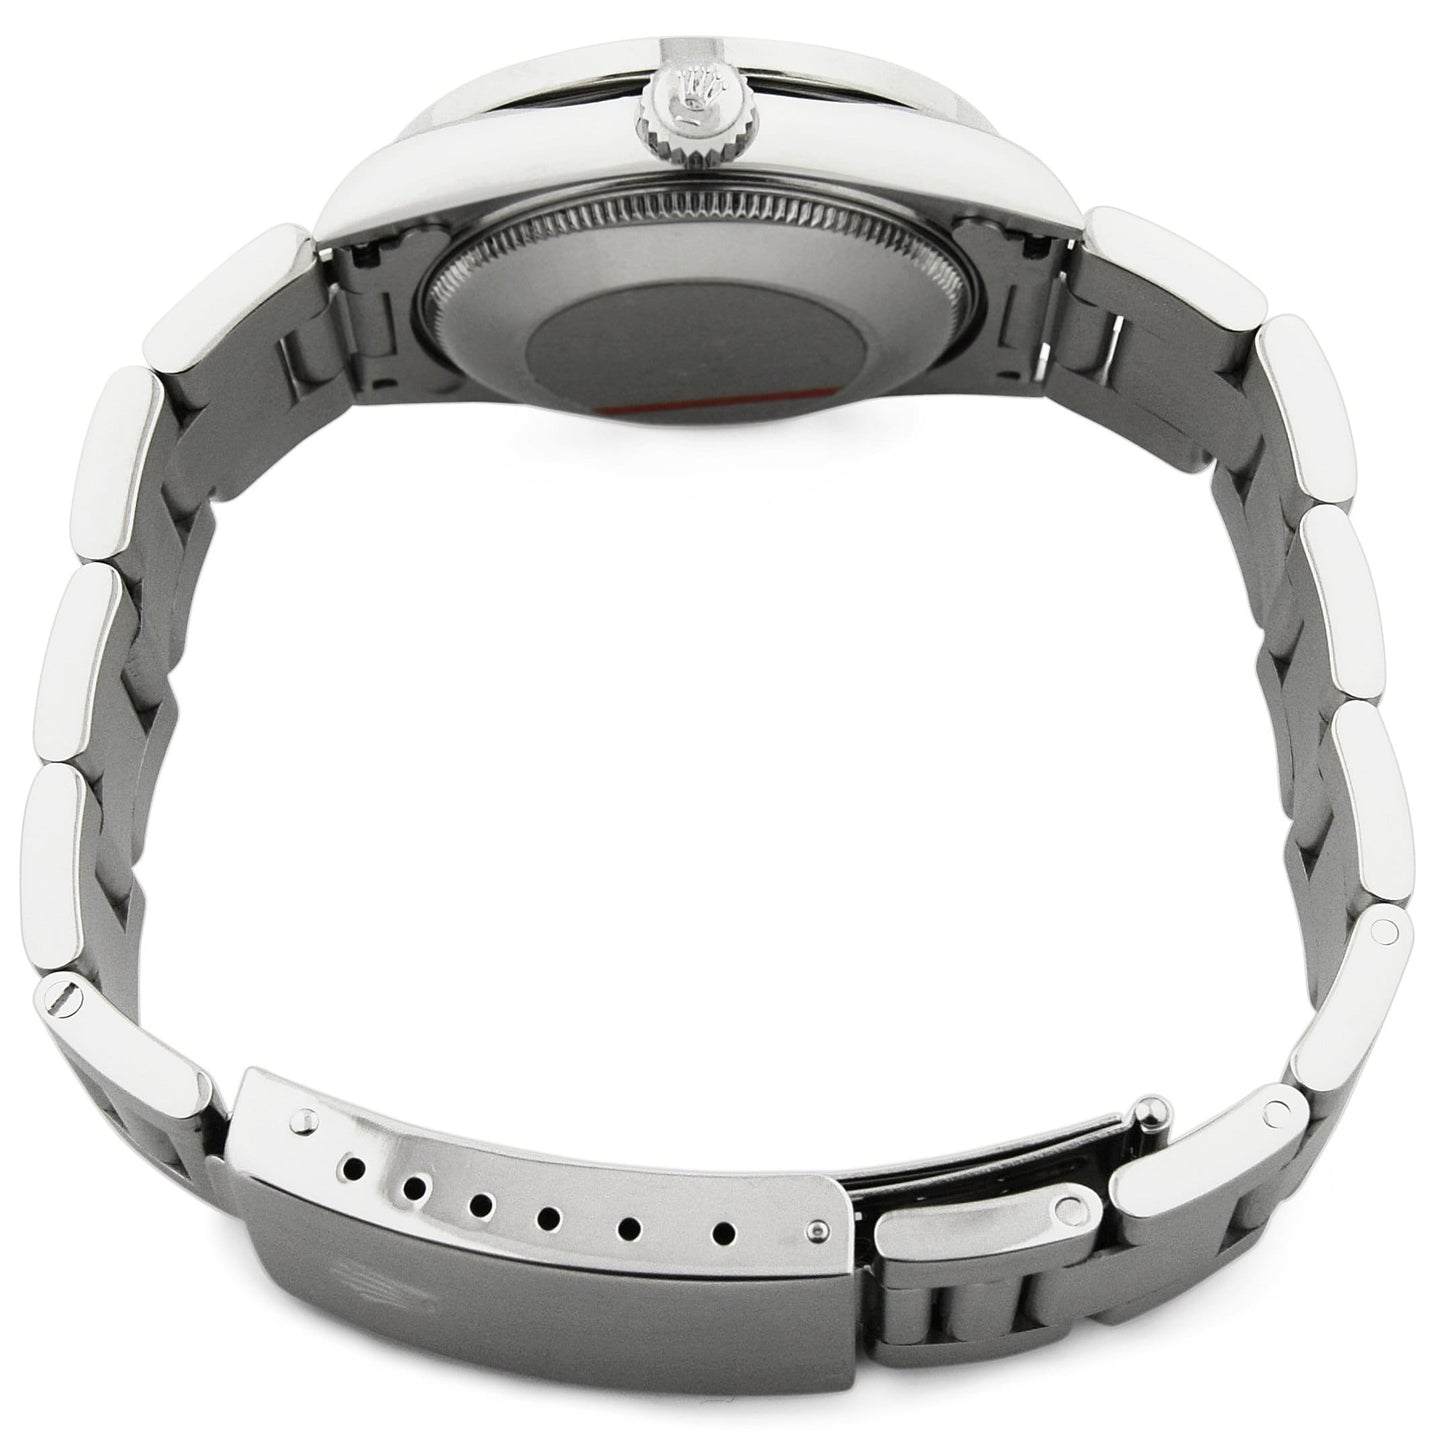 Rolex Datejust Stainless Steel 31mm Custom White MOP Diamond Dial Watch Reference#: 78240 - Happy Jewelers Fine Jewelry Lifetime Warranty